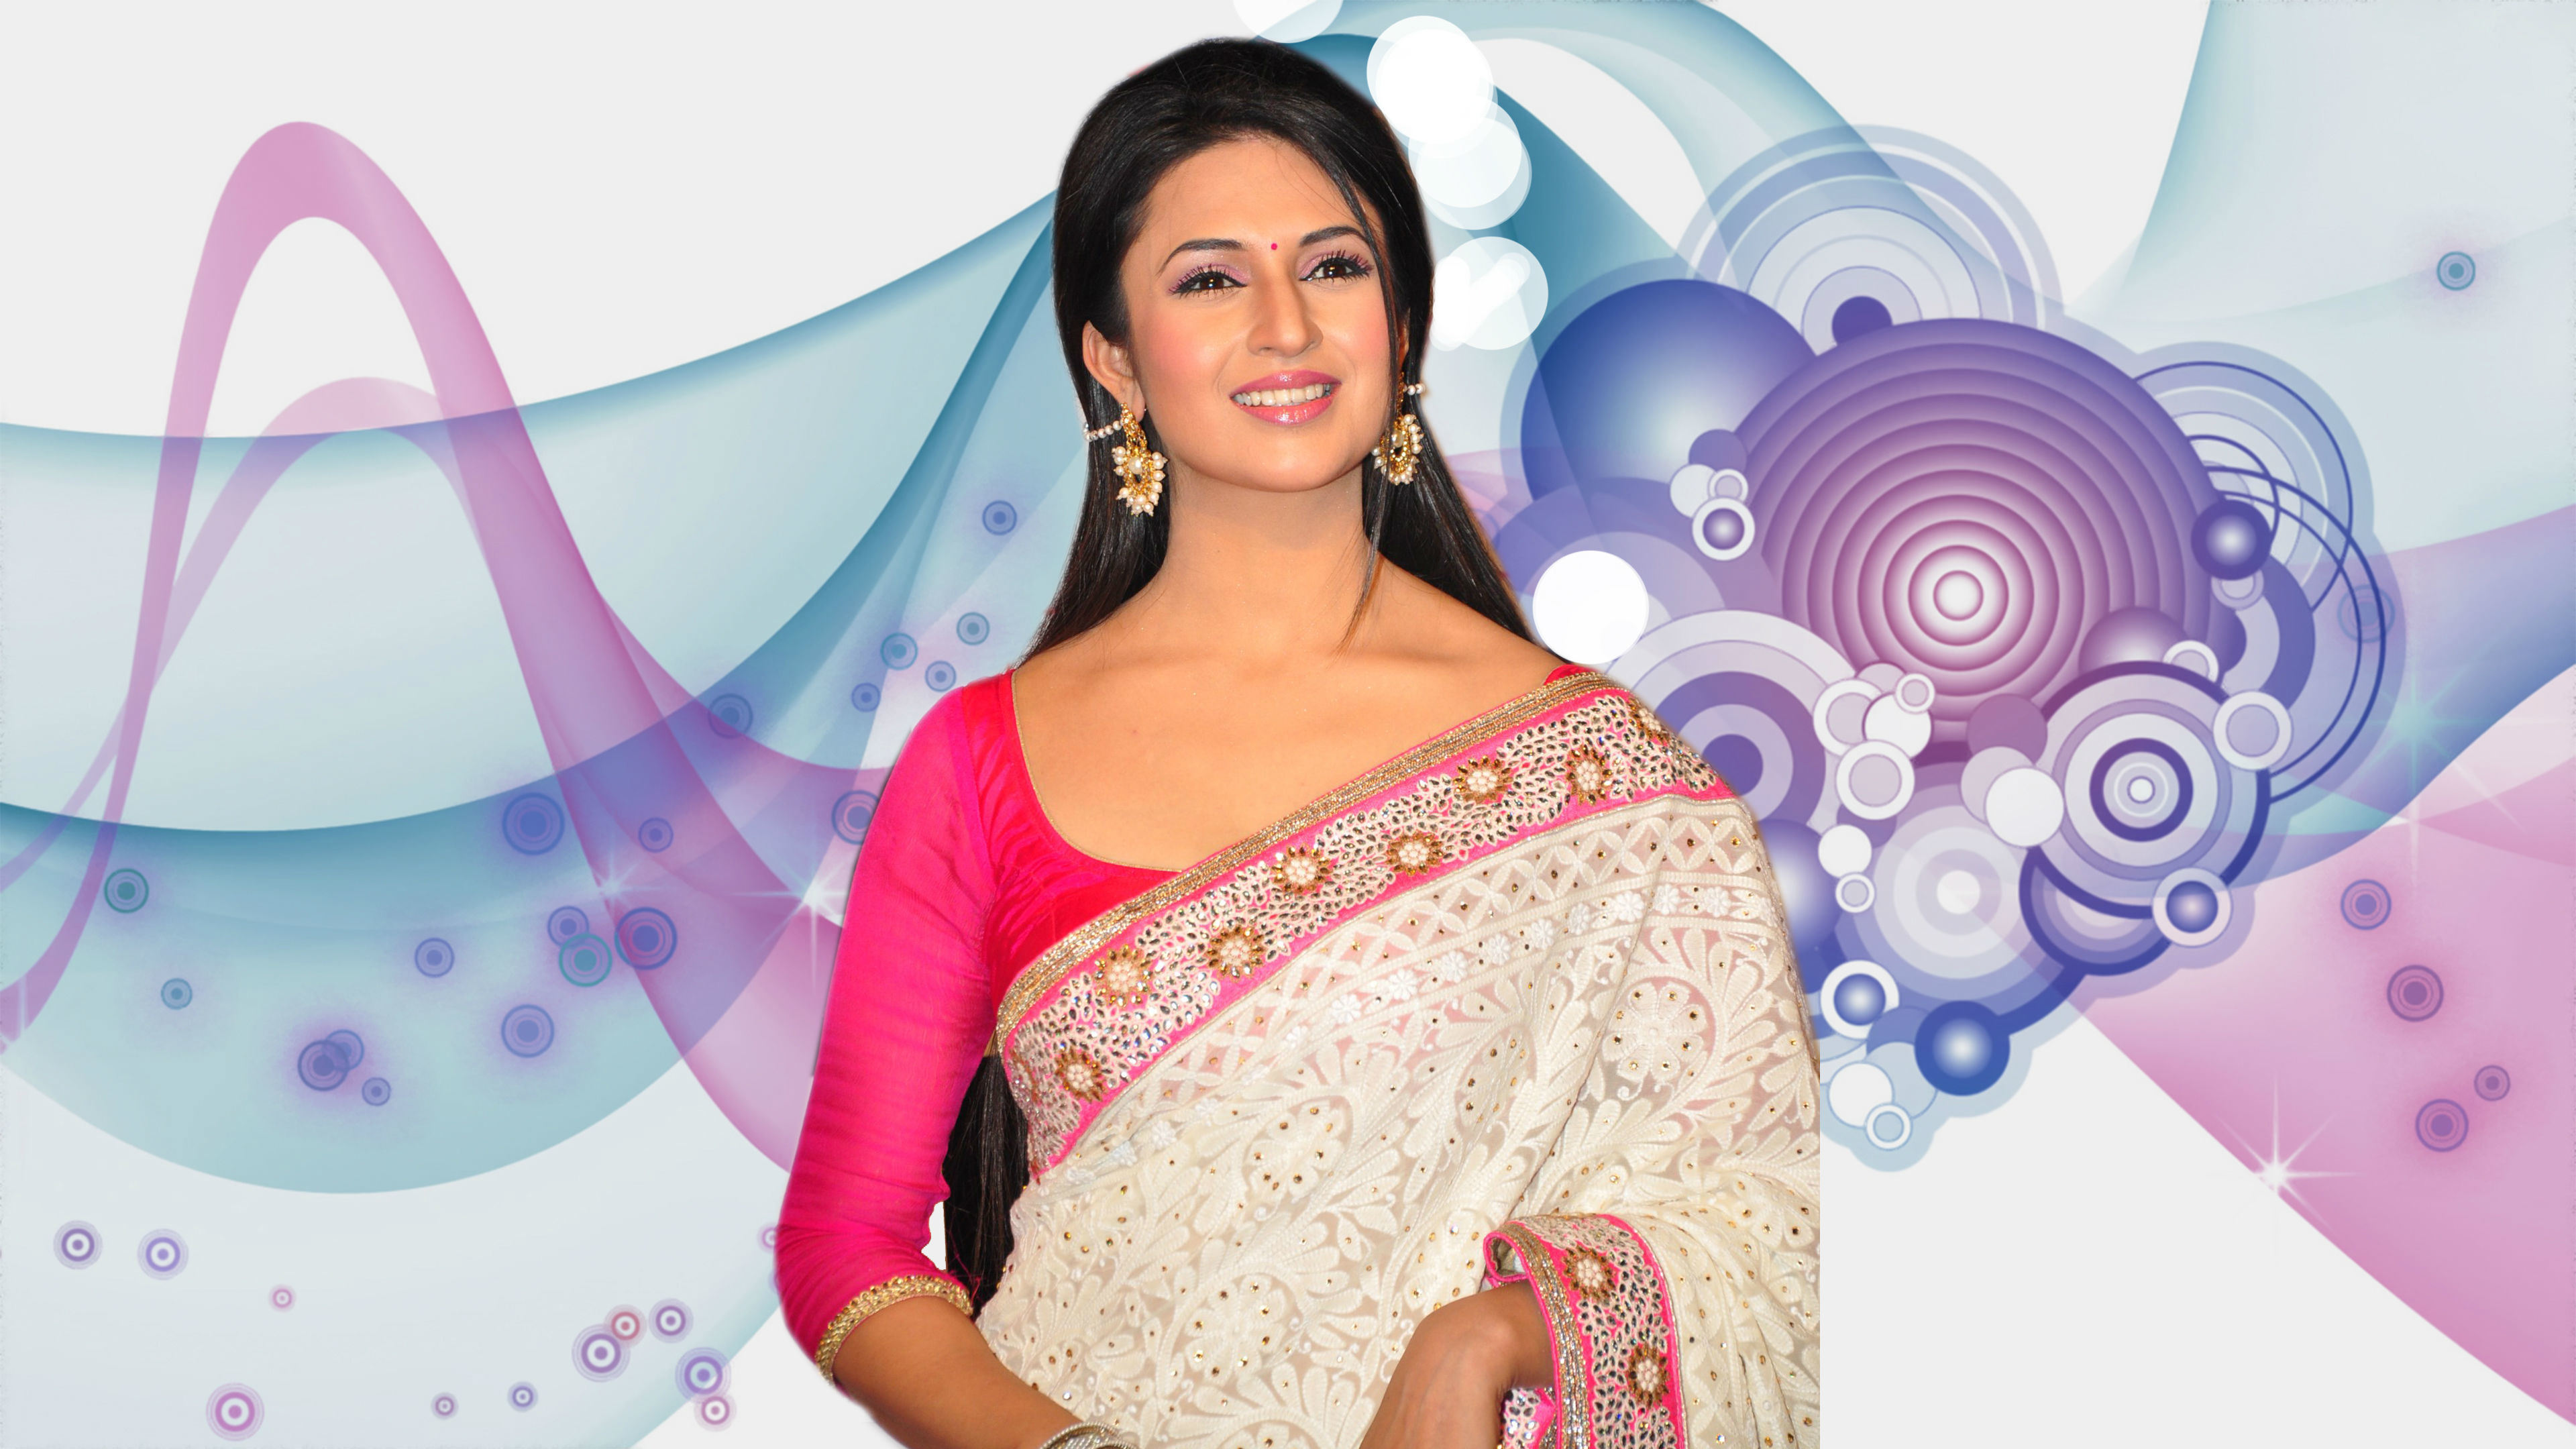 yeh hai mohabbatein wallpaper,pink,clothing,sari,magenta,beauty